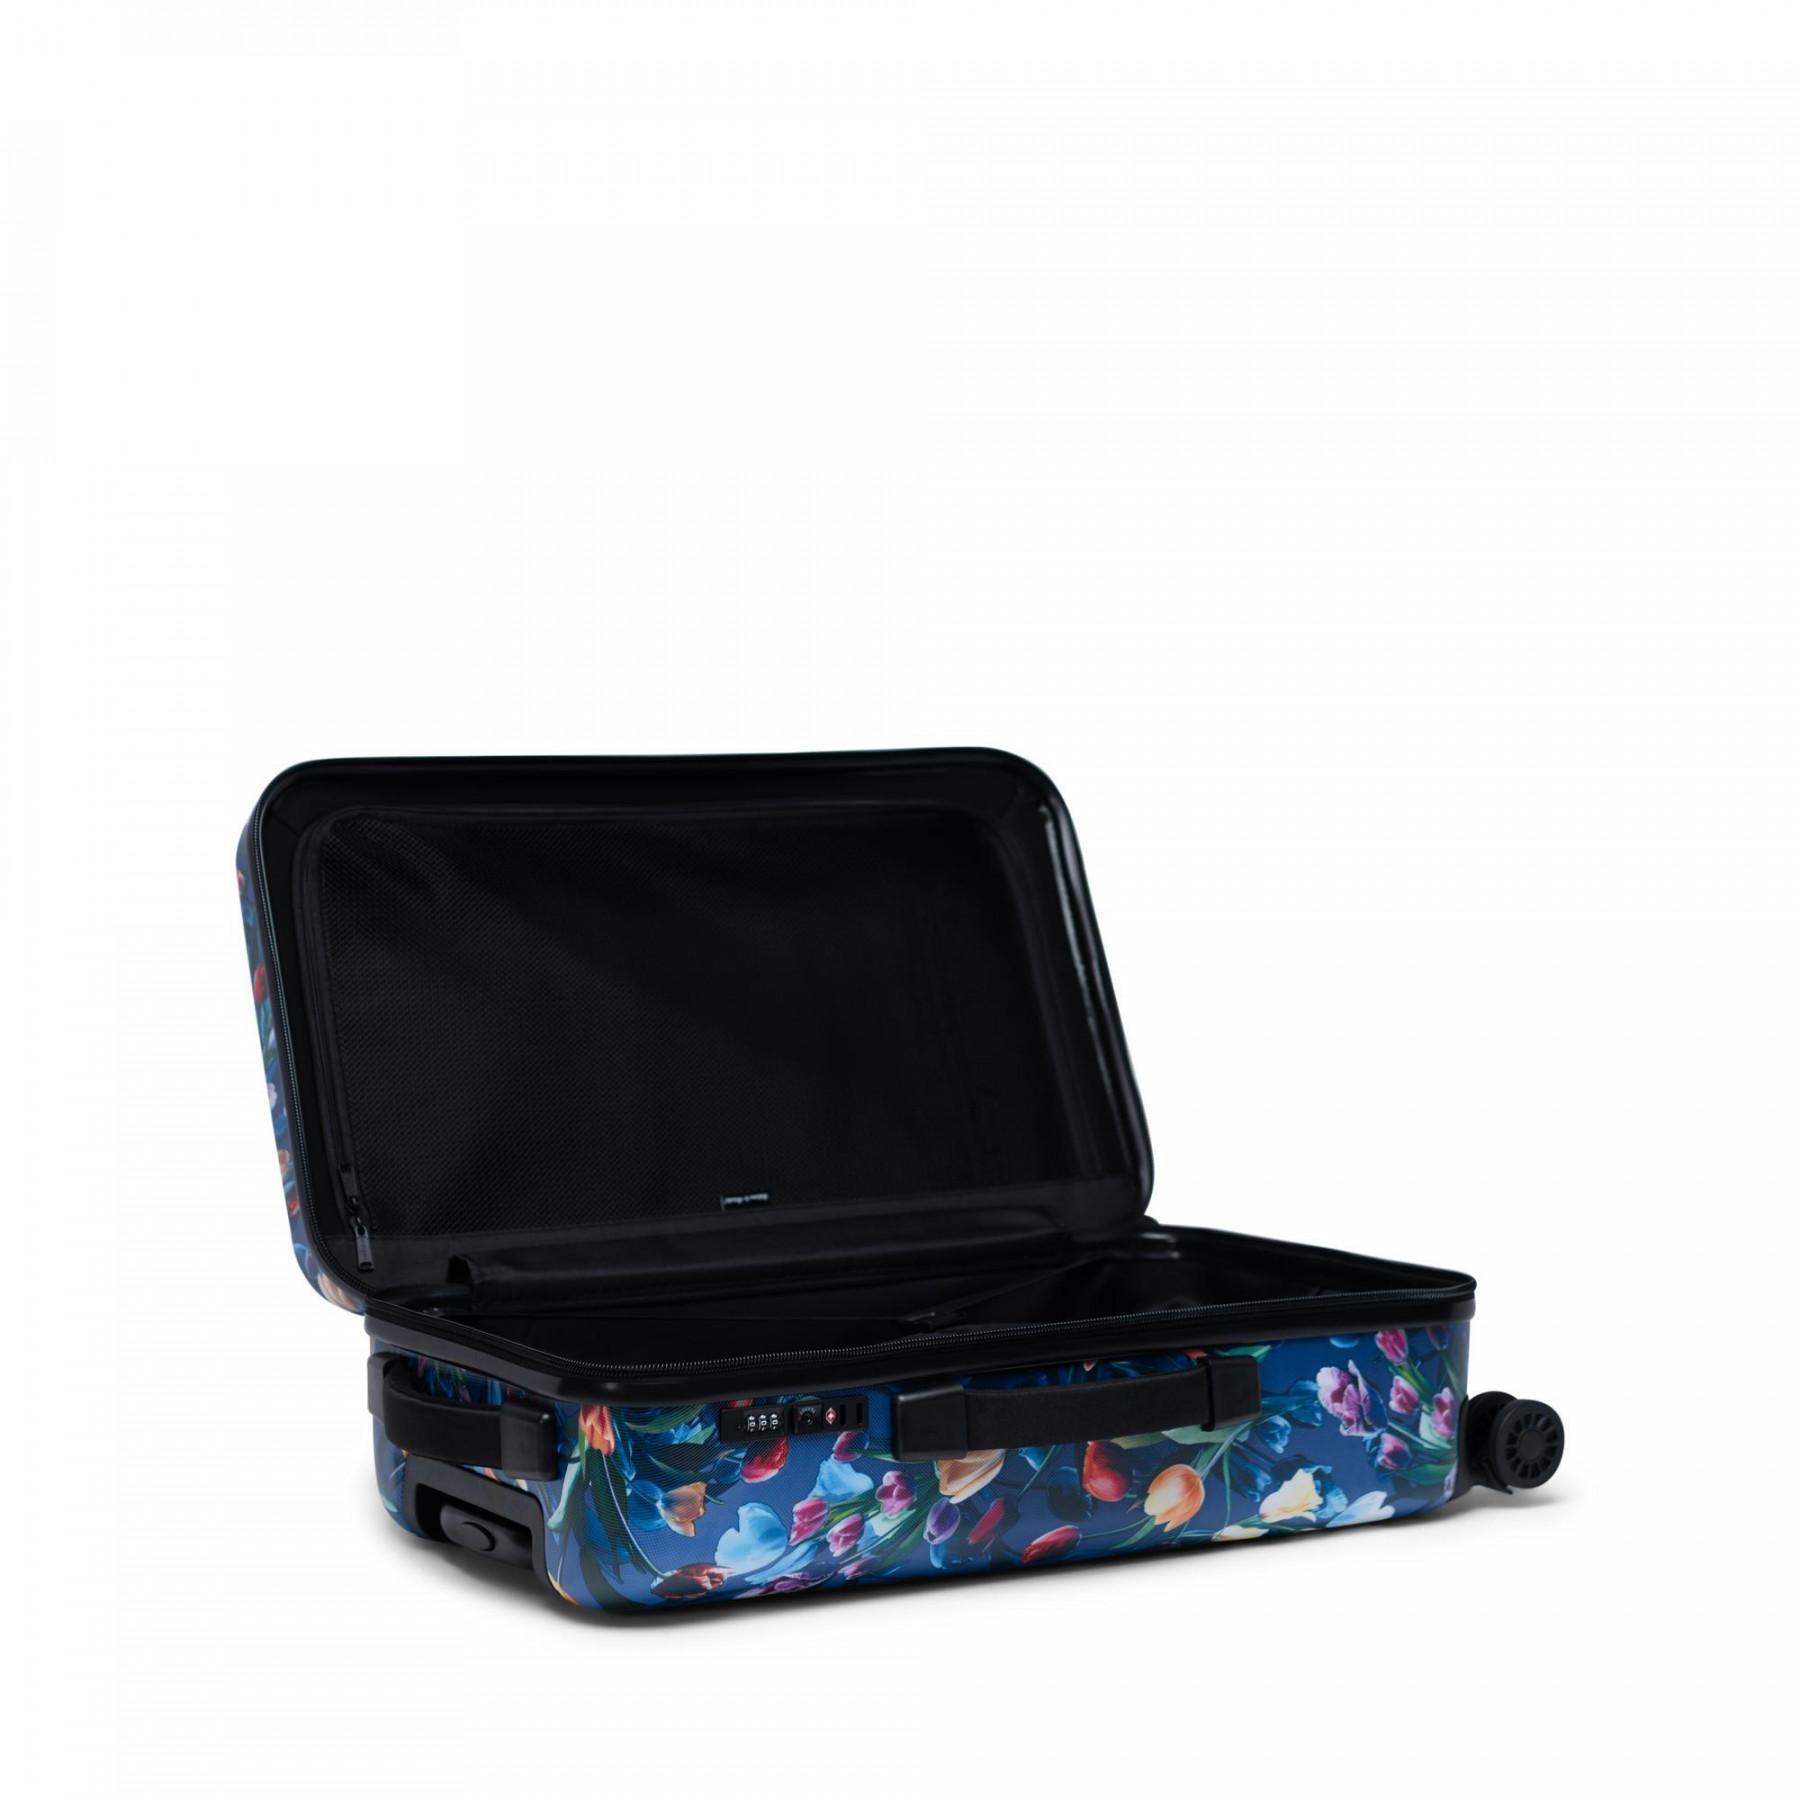 Suitcase Herschel trade medium royal hoffman